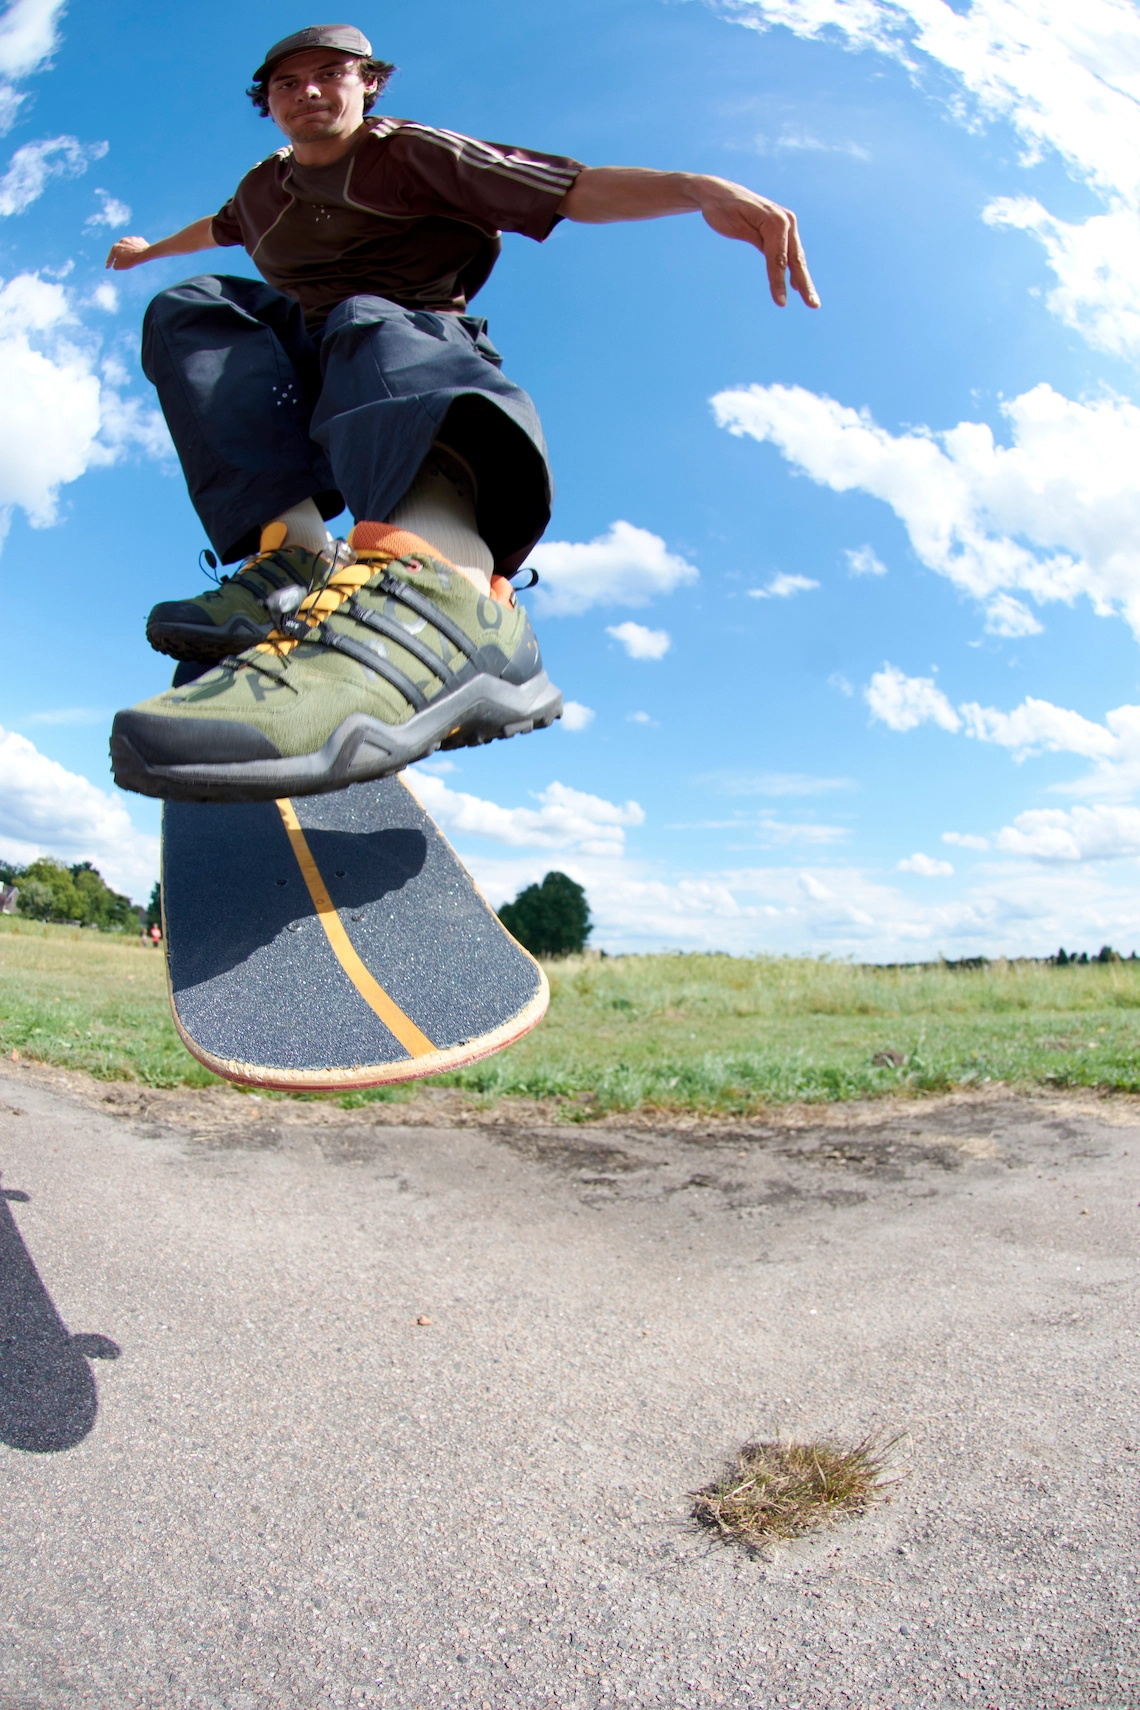 Pop Trading Company adidas fotoshoot man doet skateboard trick